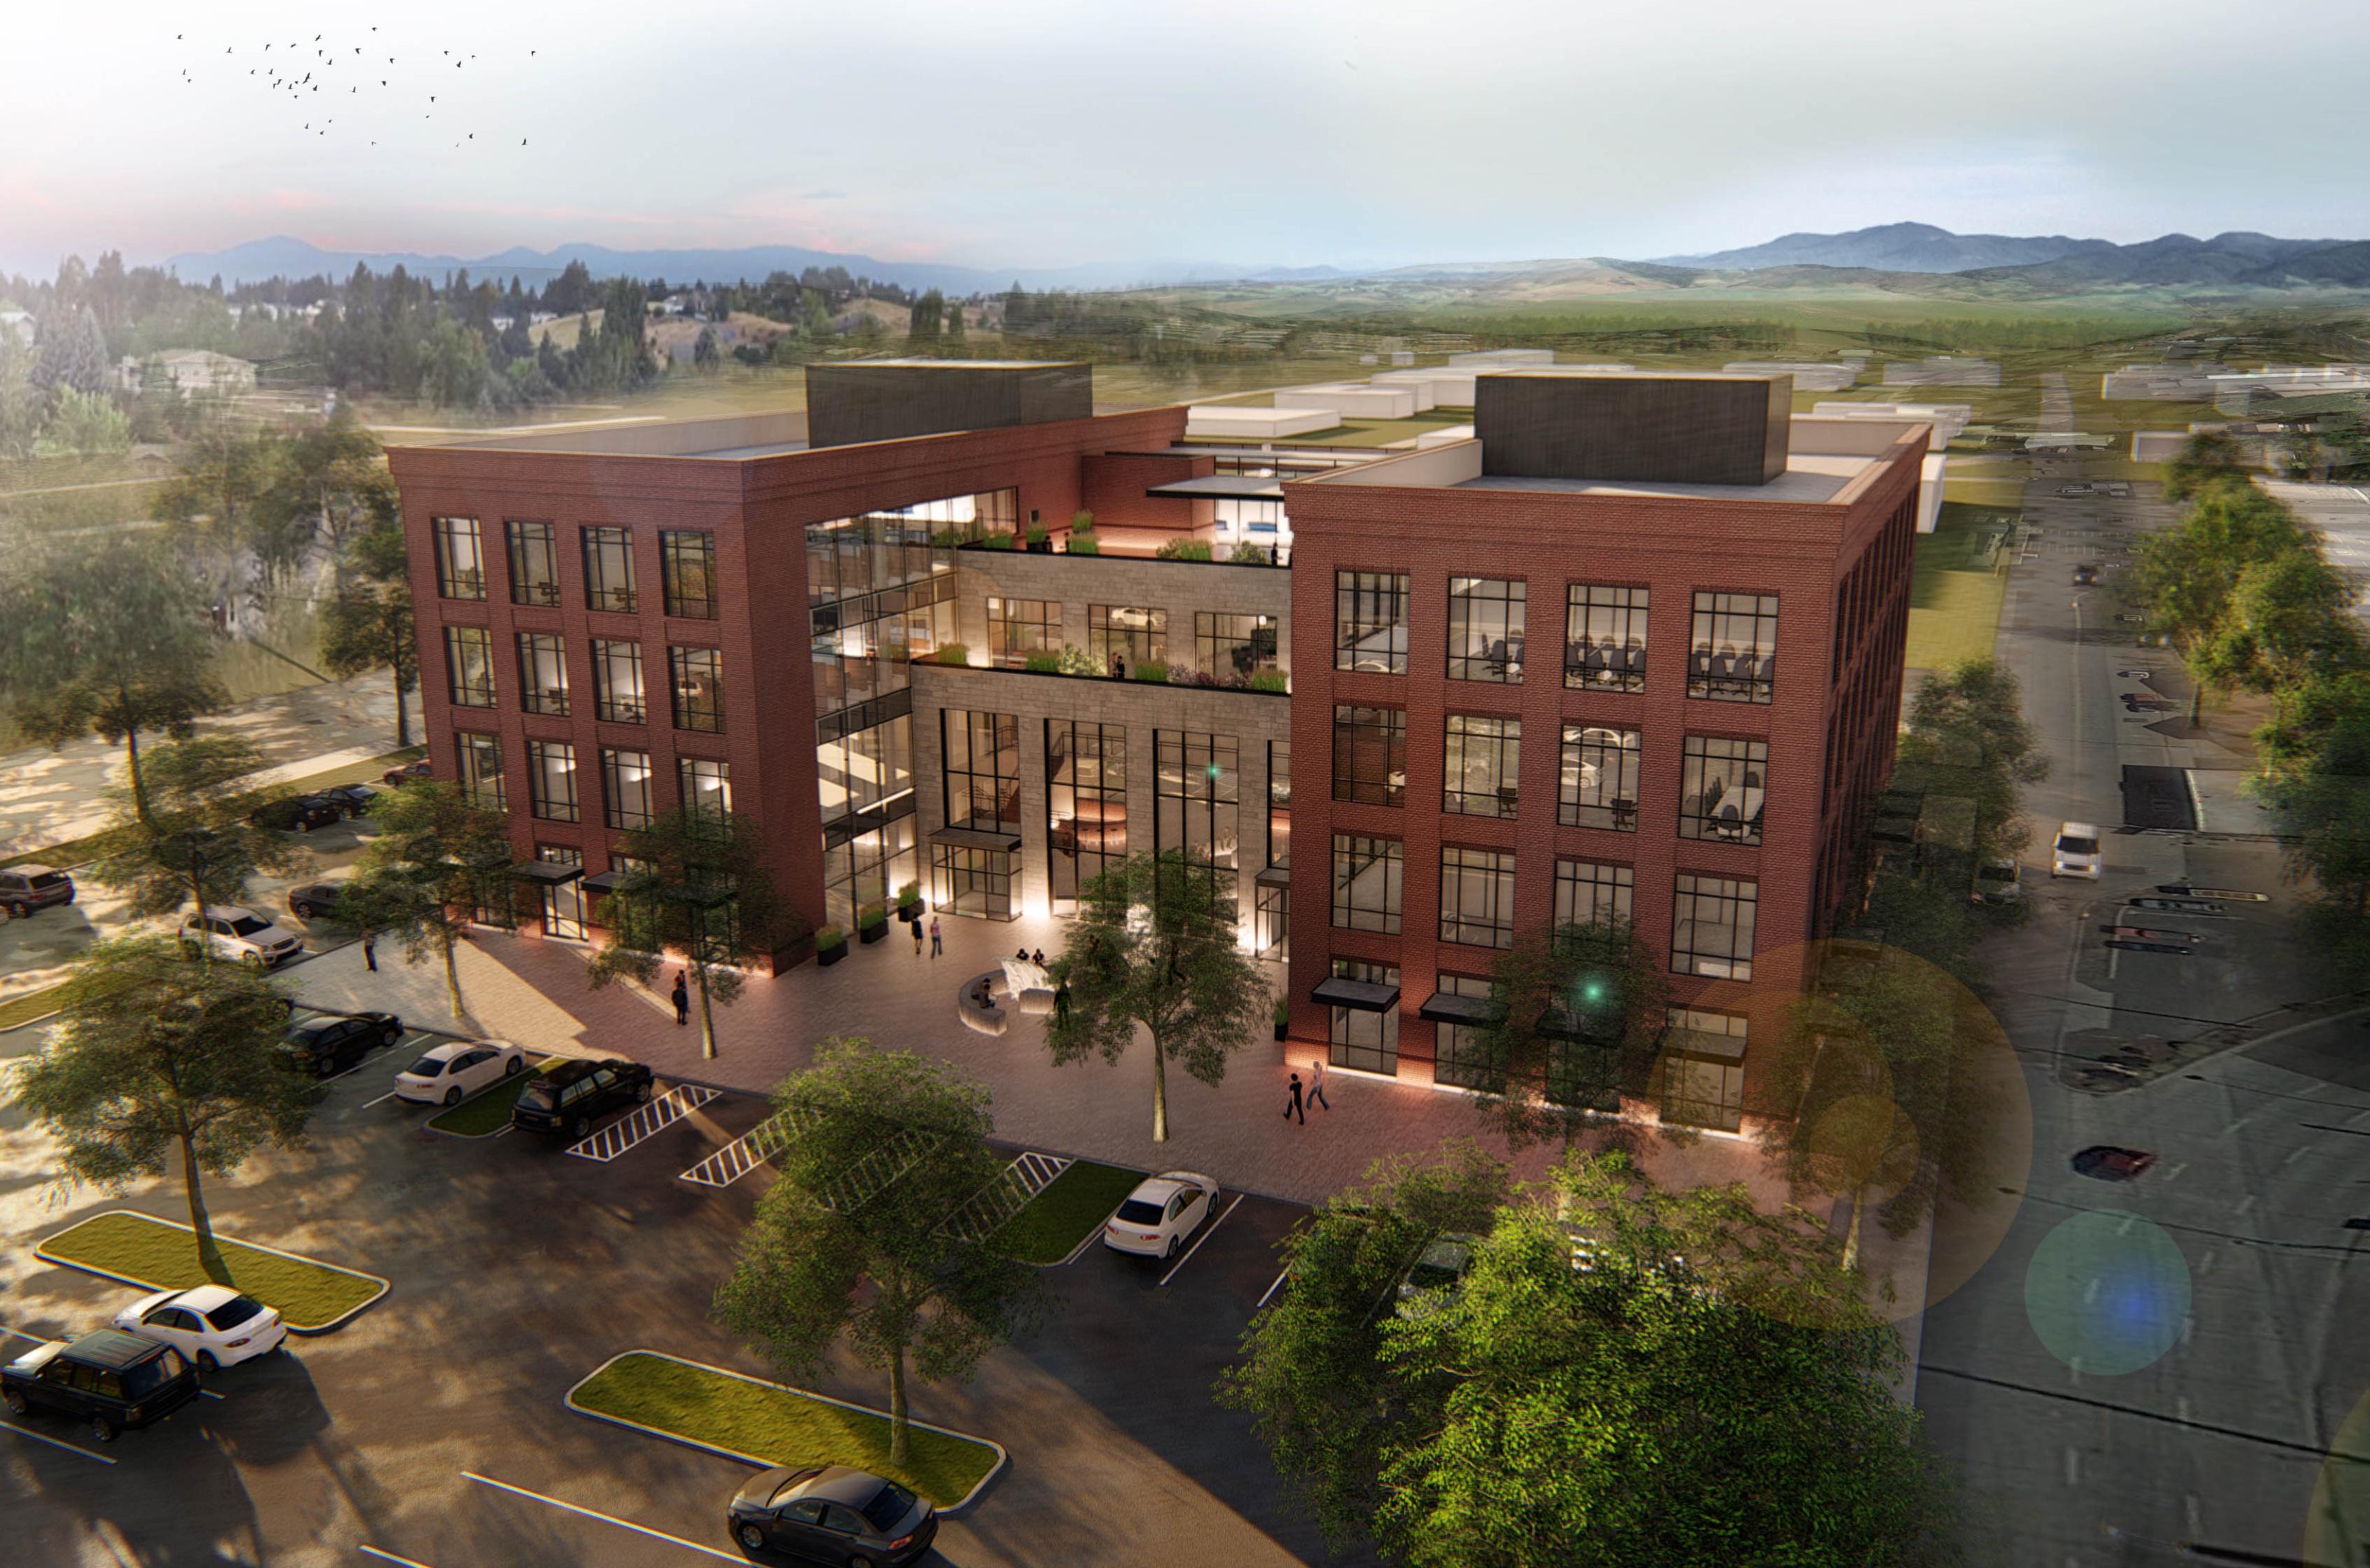 Moscow Idaho Based Emsi To Build New Company Headquarters The